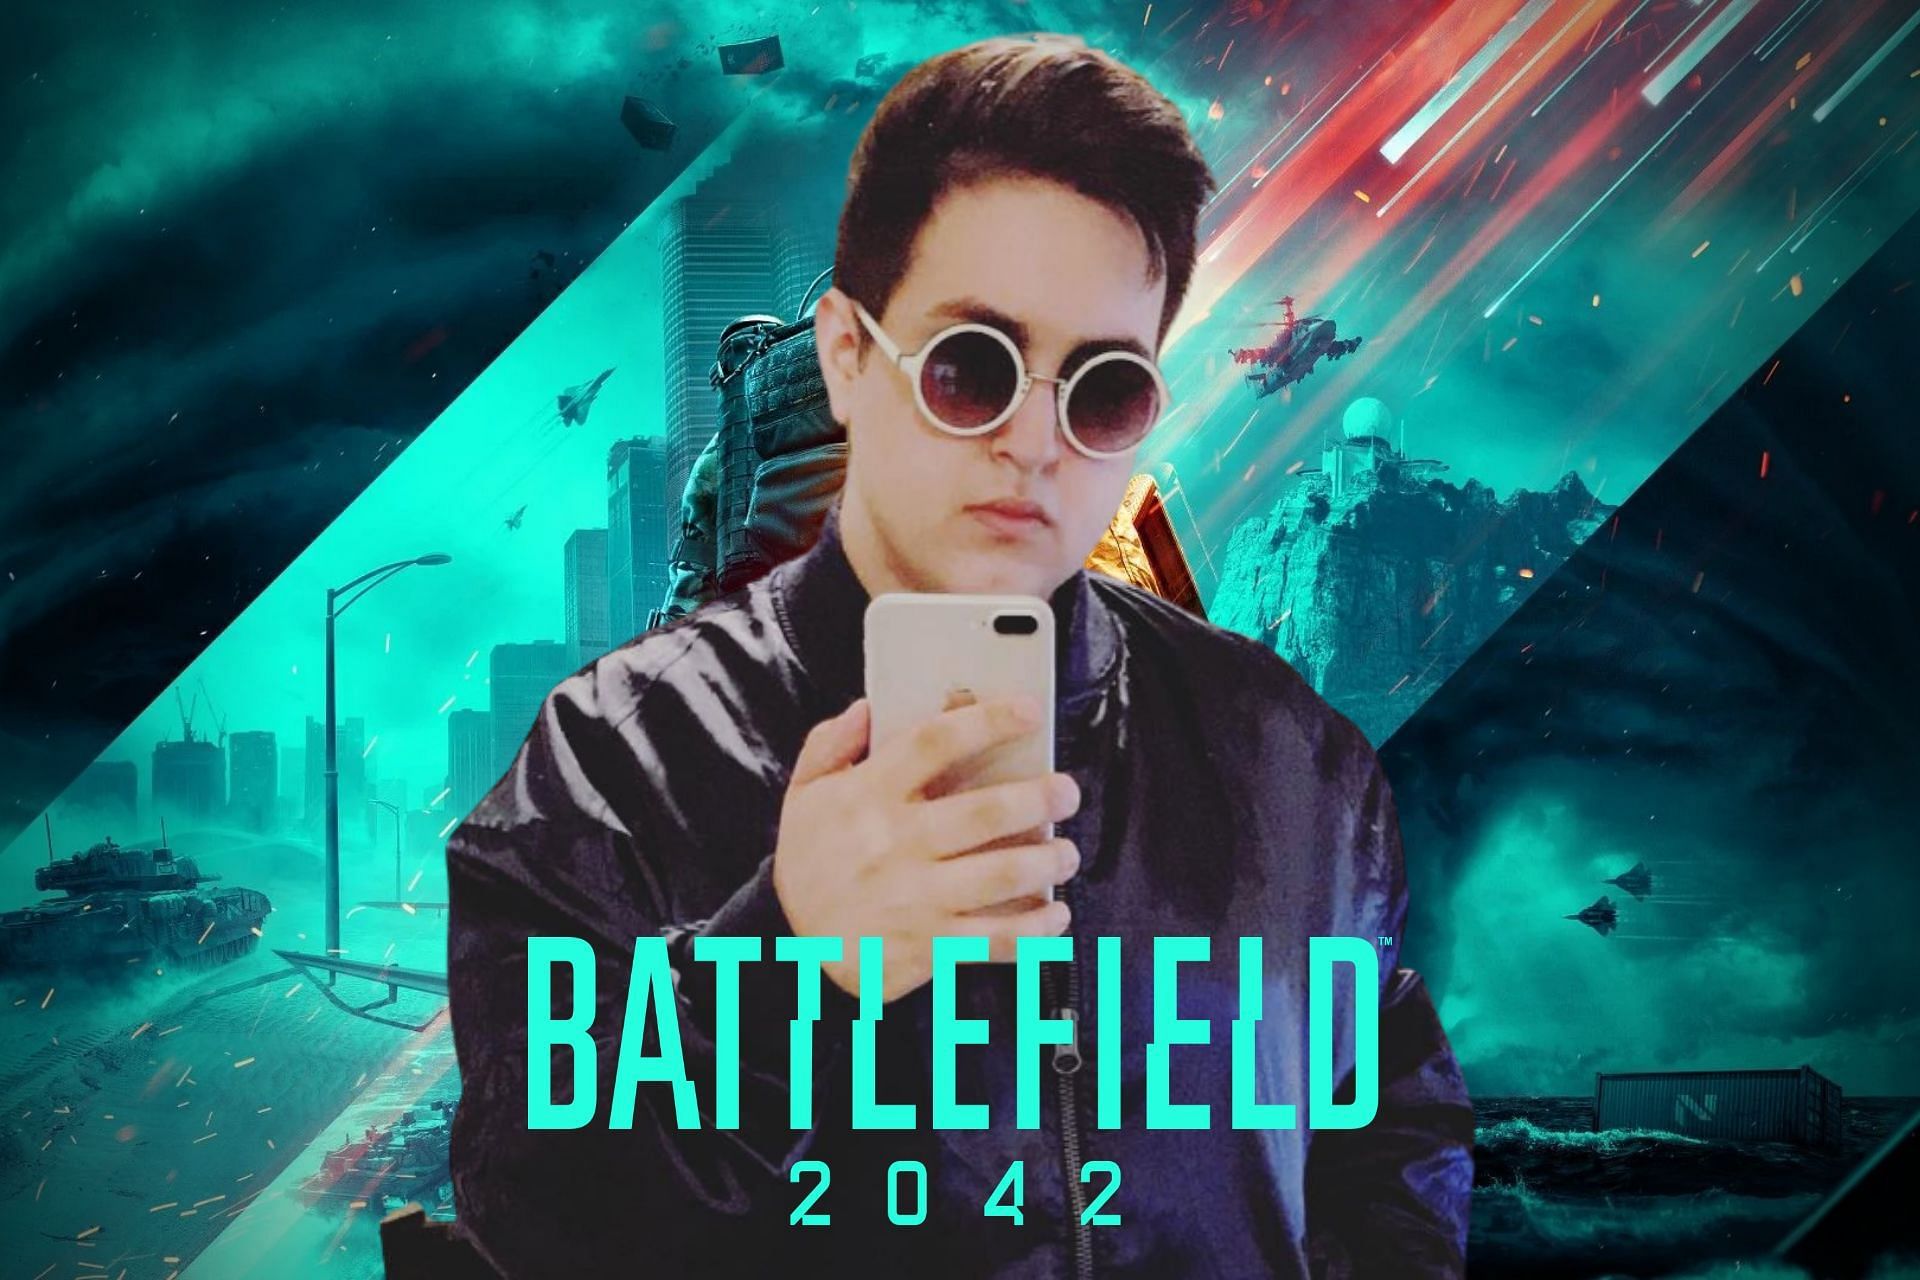 Pokelawls shocked by Battlefield 2042&#039;s performance on Twitch (Image via Sportskeeda)